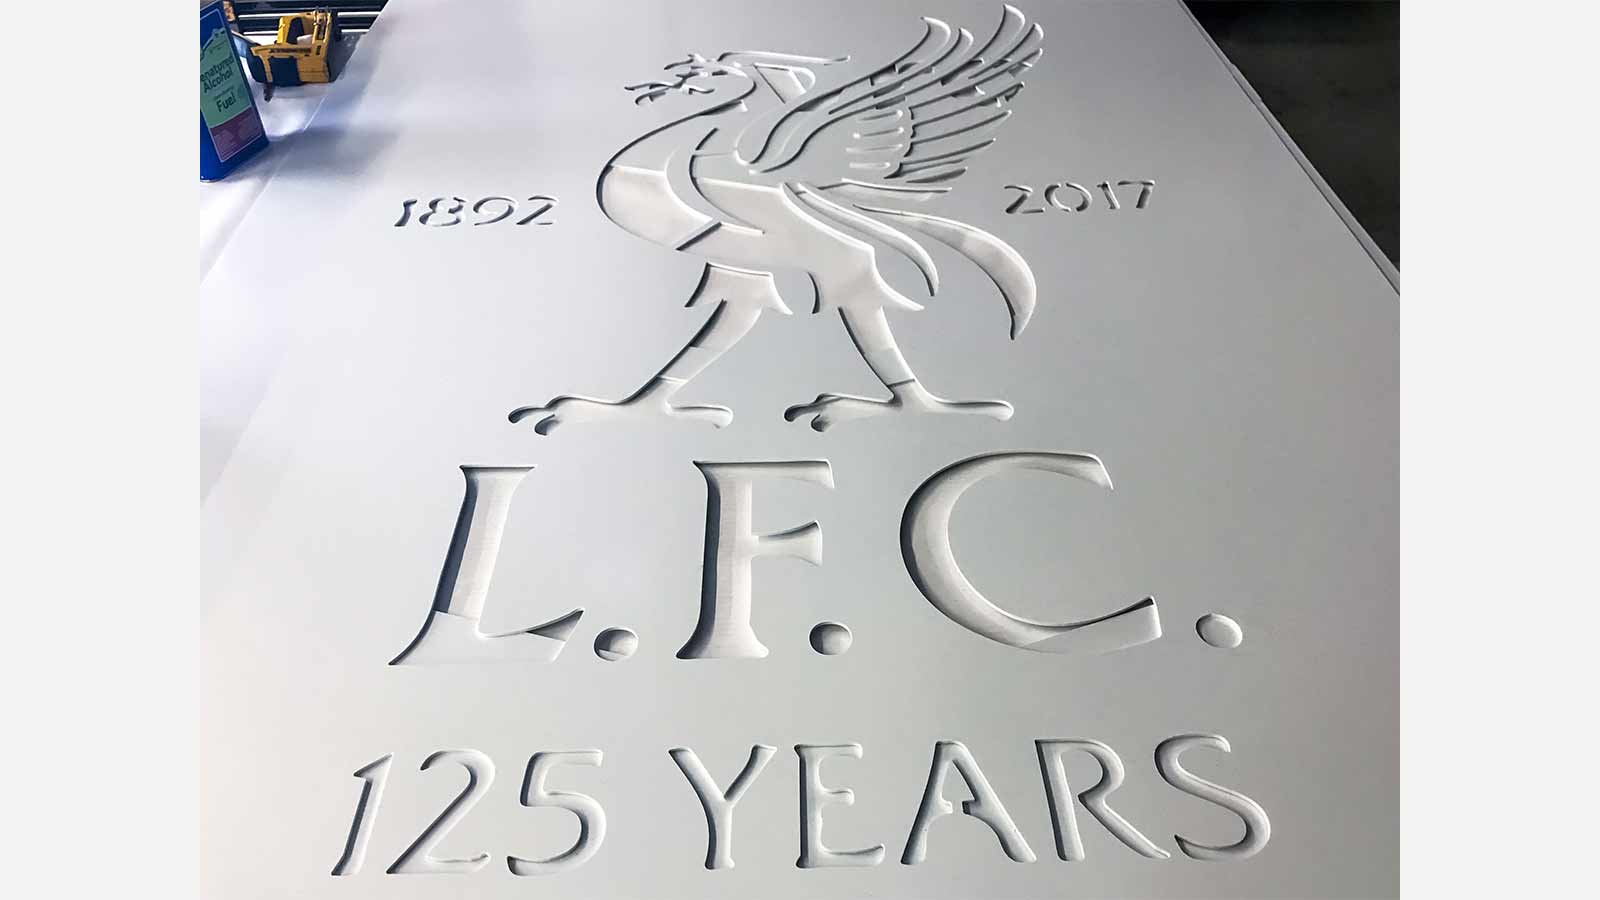 lfc 125th anniversary engraved pvc sign